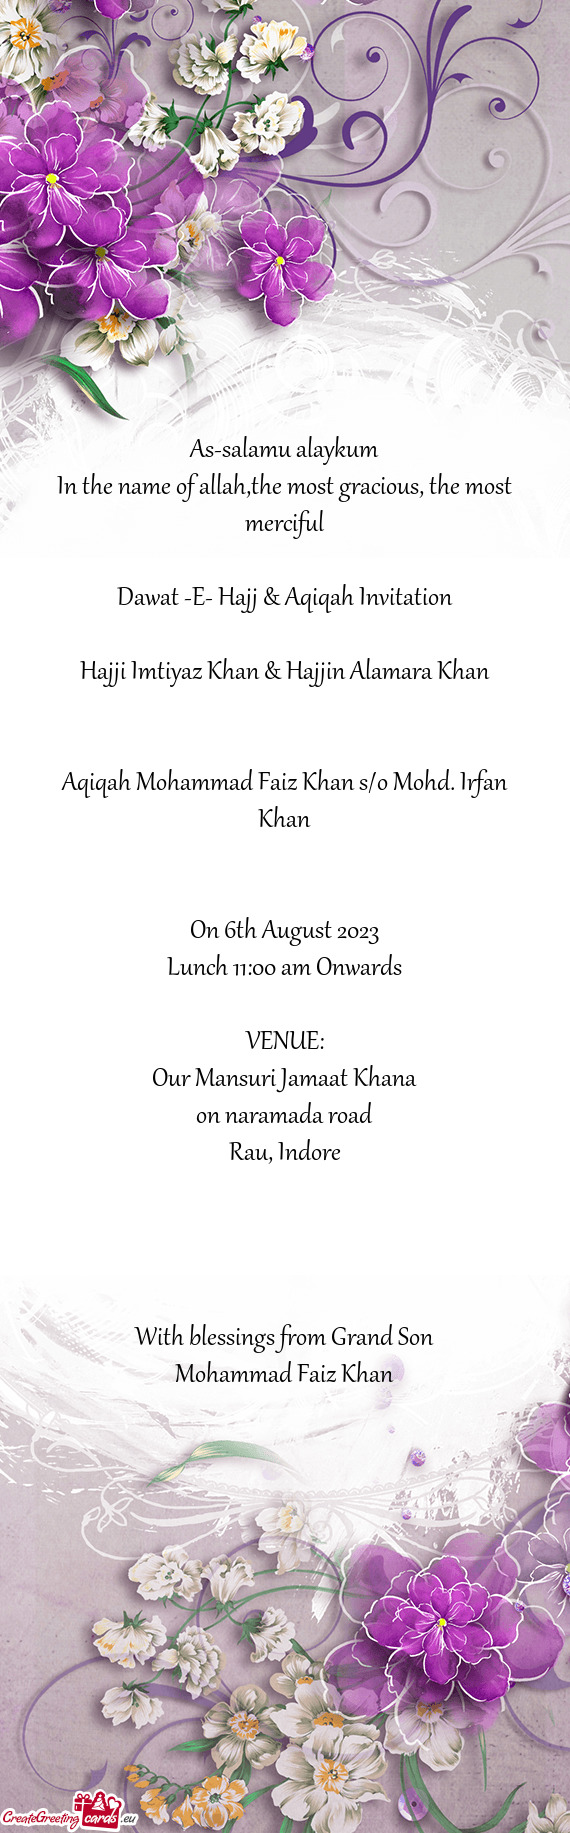 Aqiqah Mohammad Faiz Khan s/o Mohd. Irfan Khan